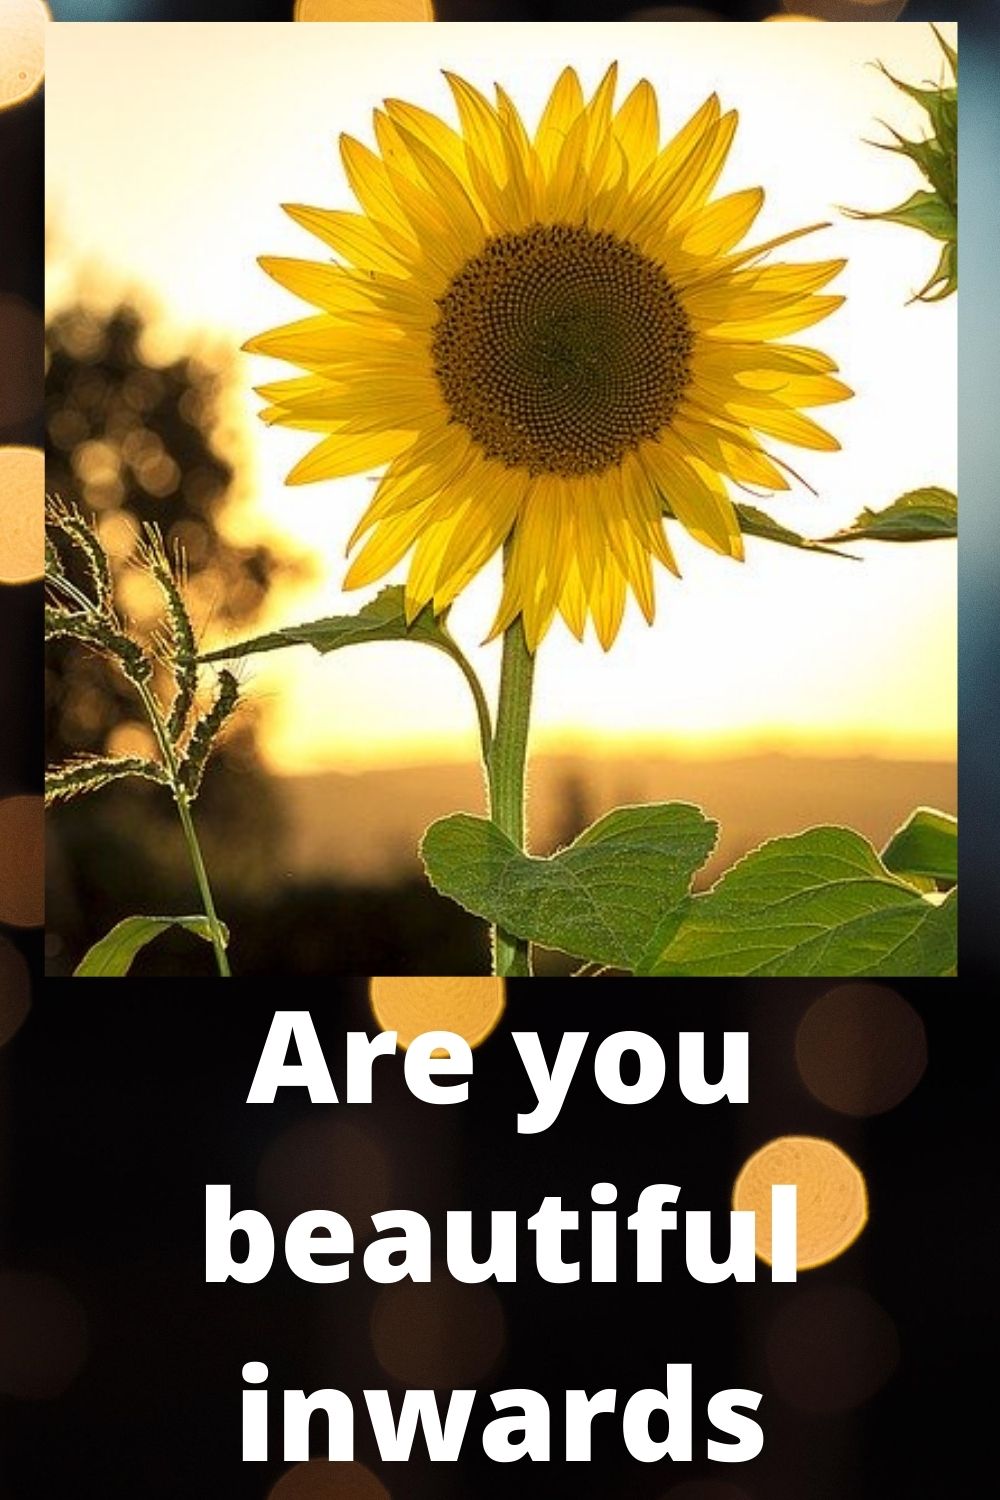 Are you beautiful inwards